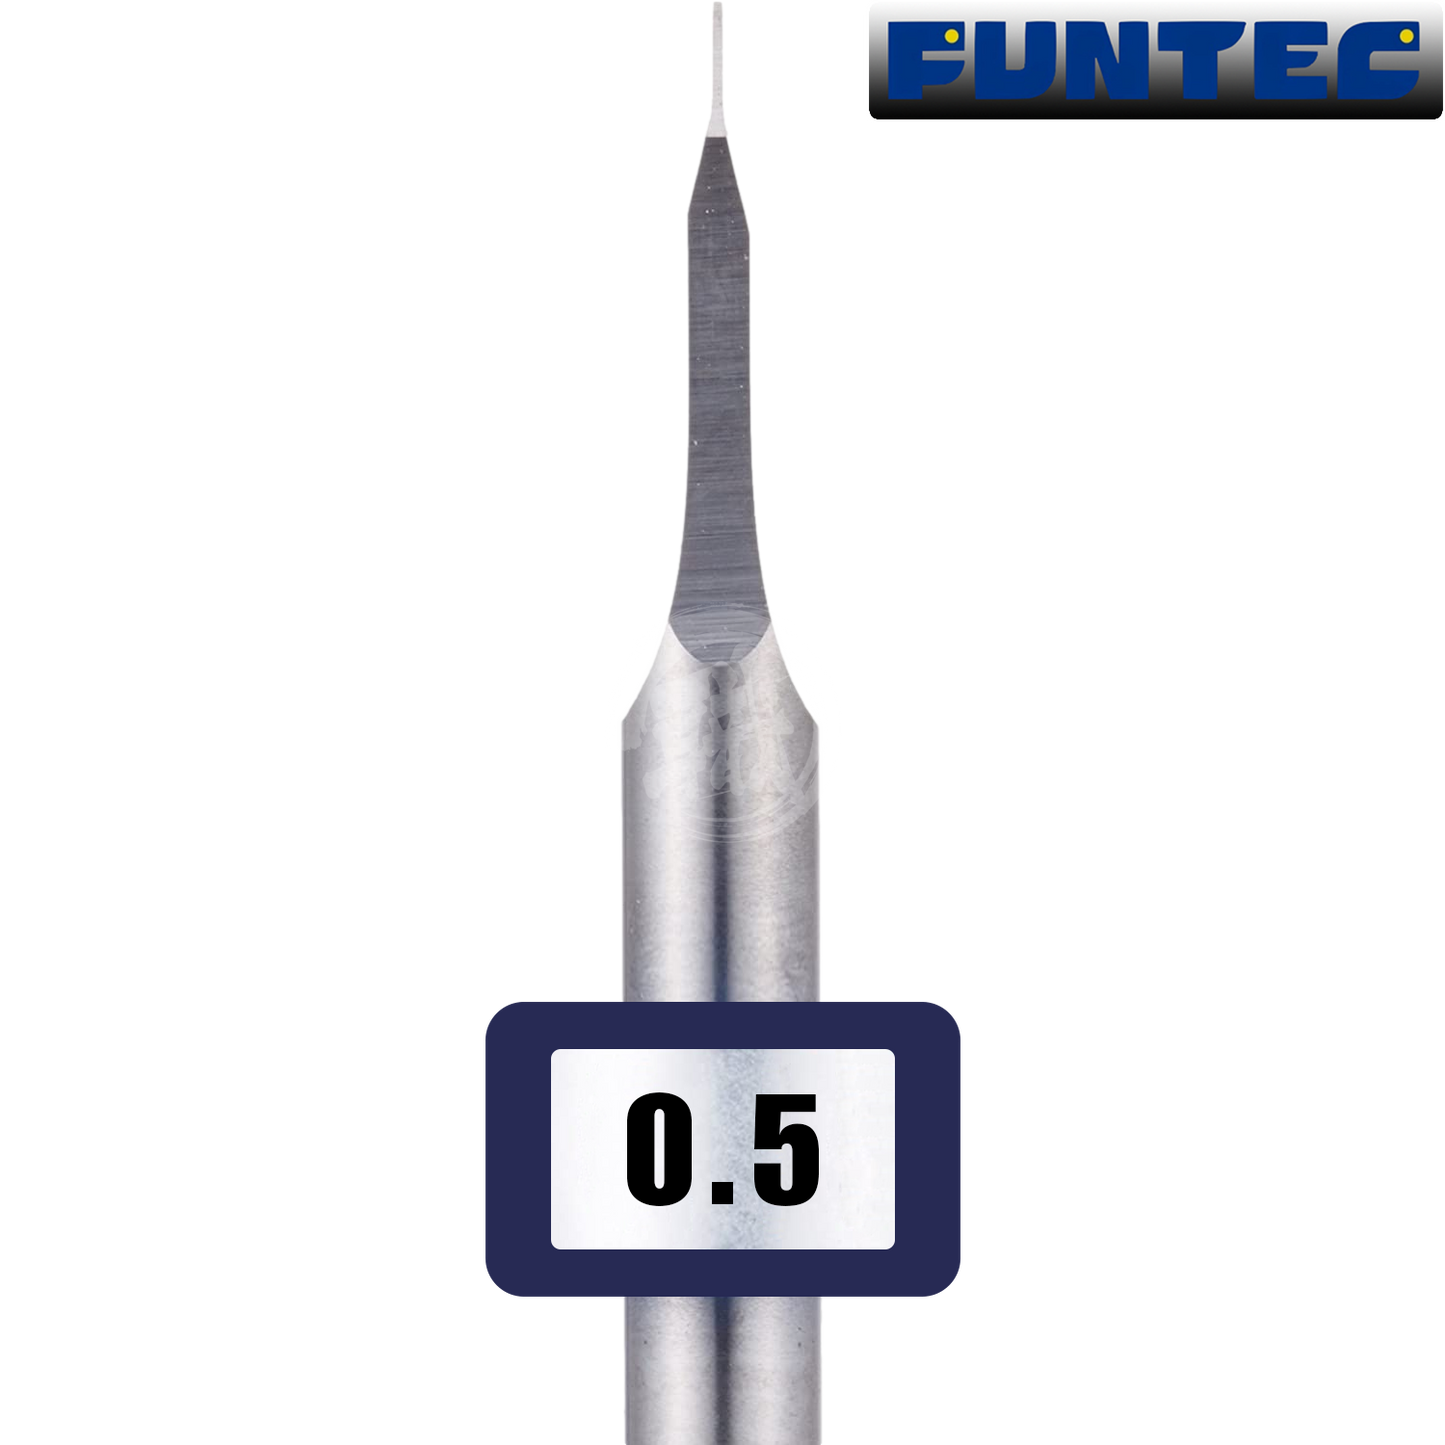 Funtec - Tungsten Carbide Chisel Bits [0.5mm] - ShokuninGunpla